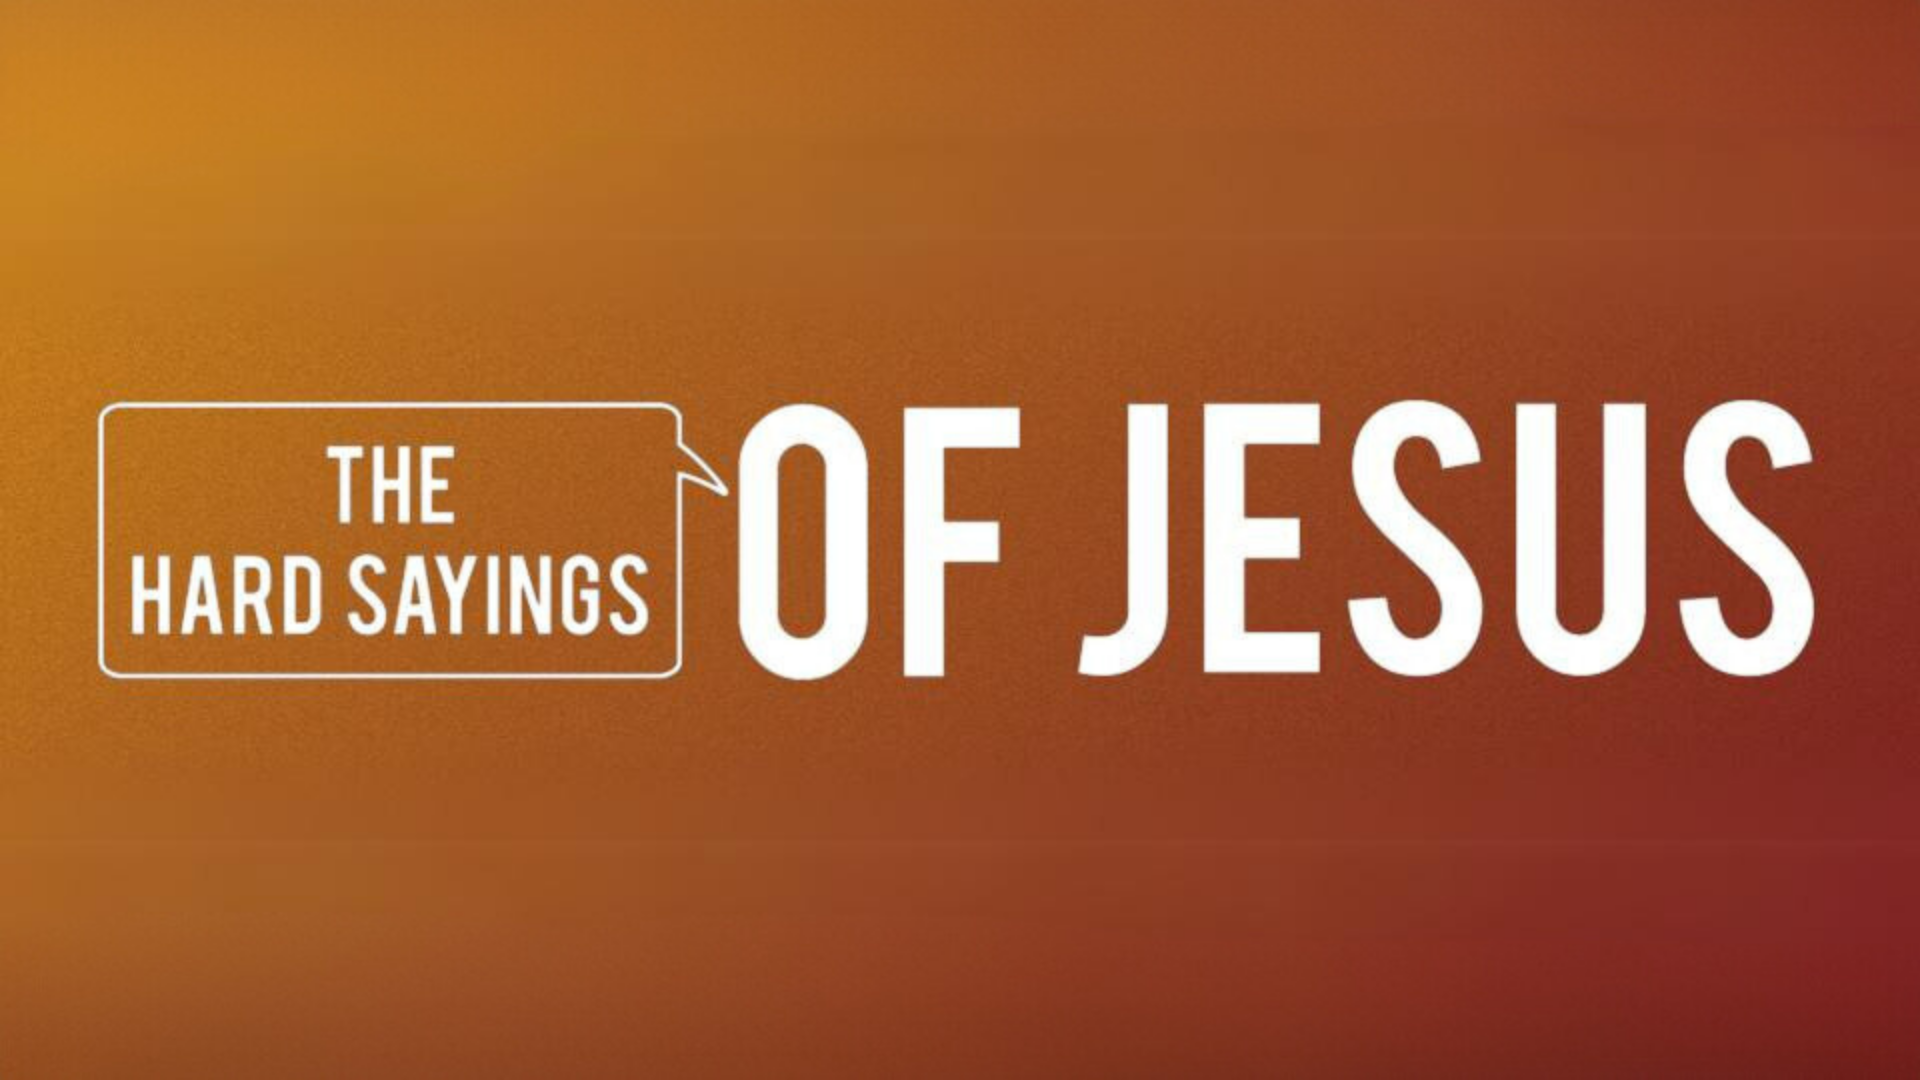 The Hard Sayings of Jesus: Who Is Jesus?